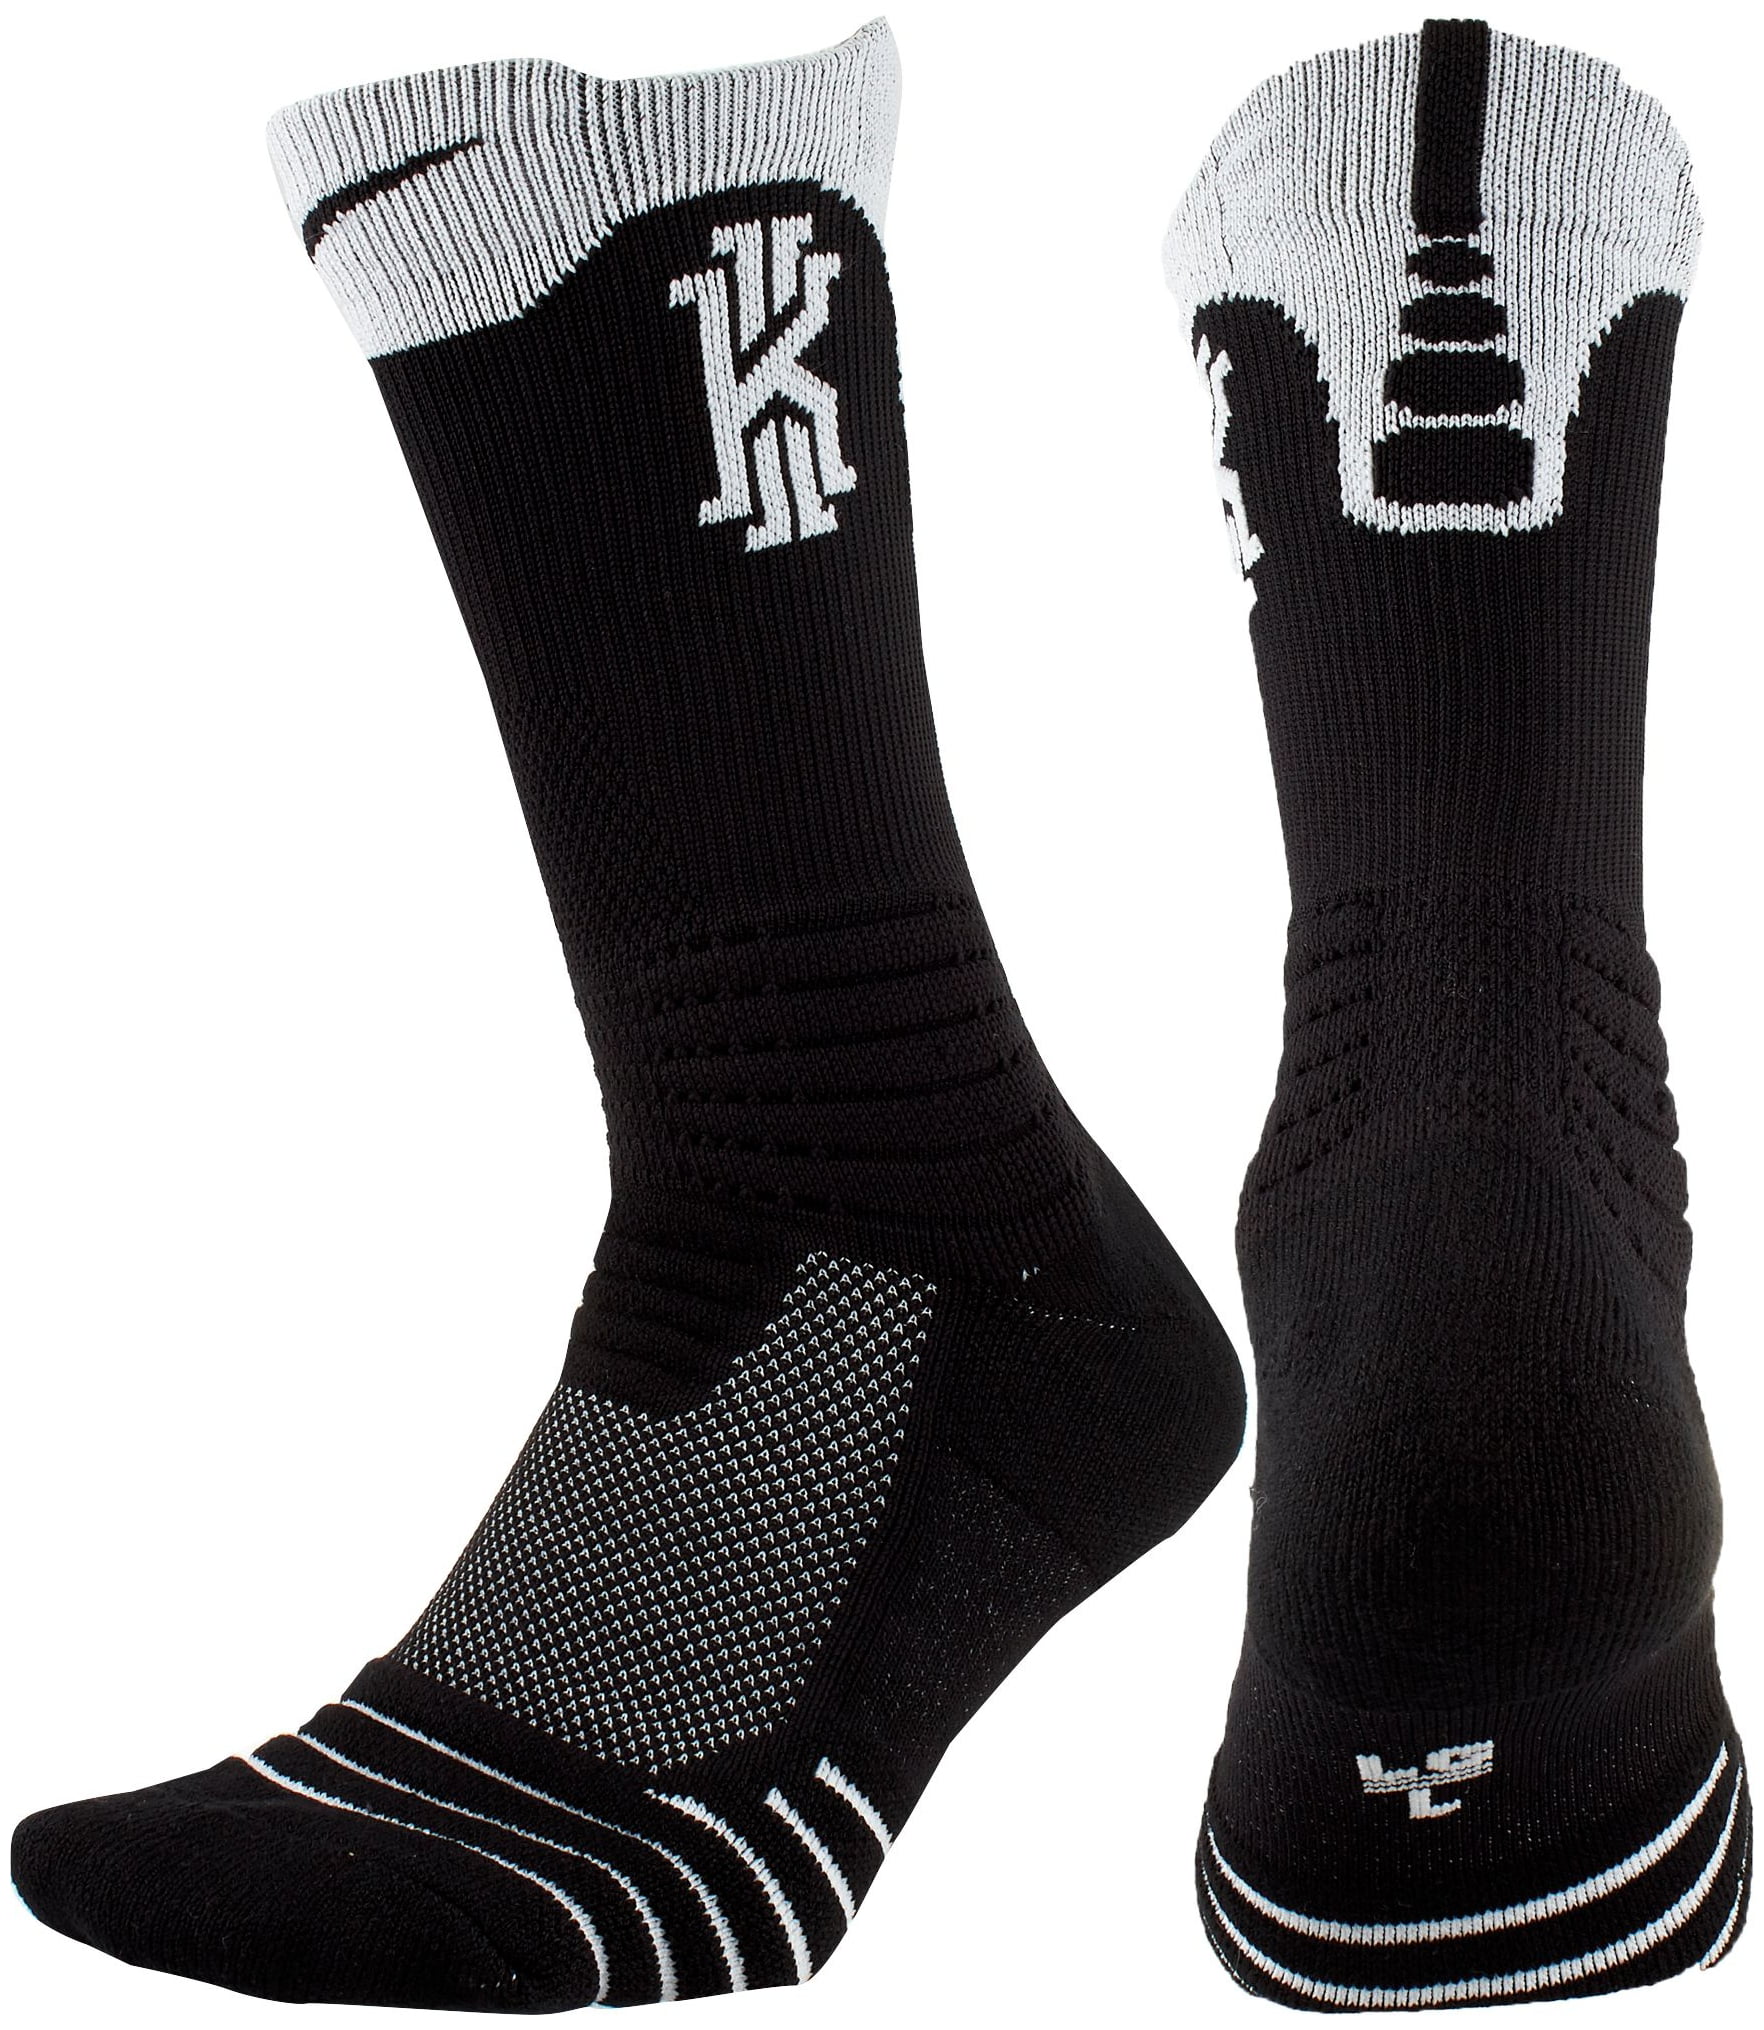 nike elite versatility socks black